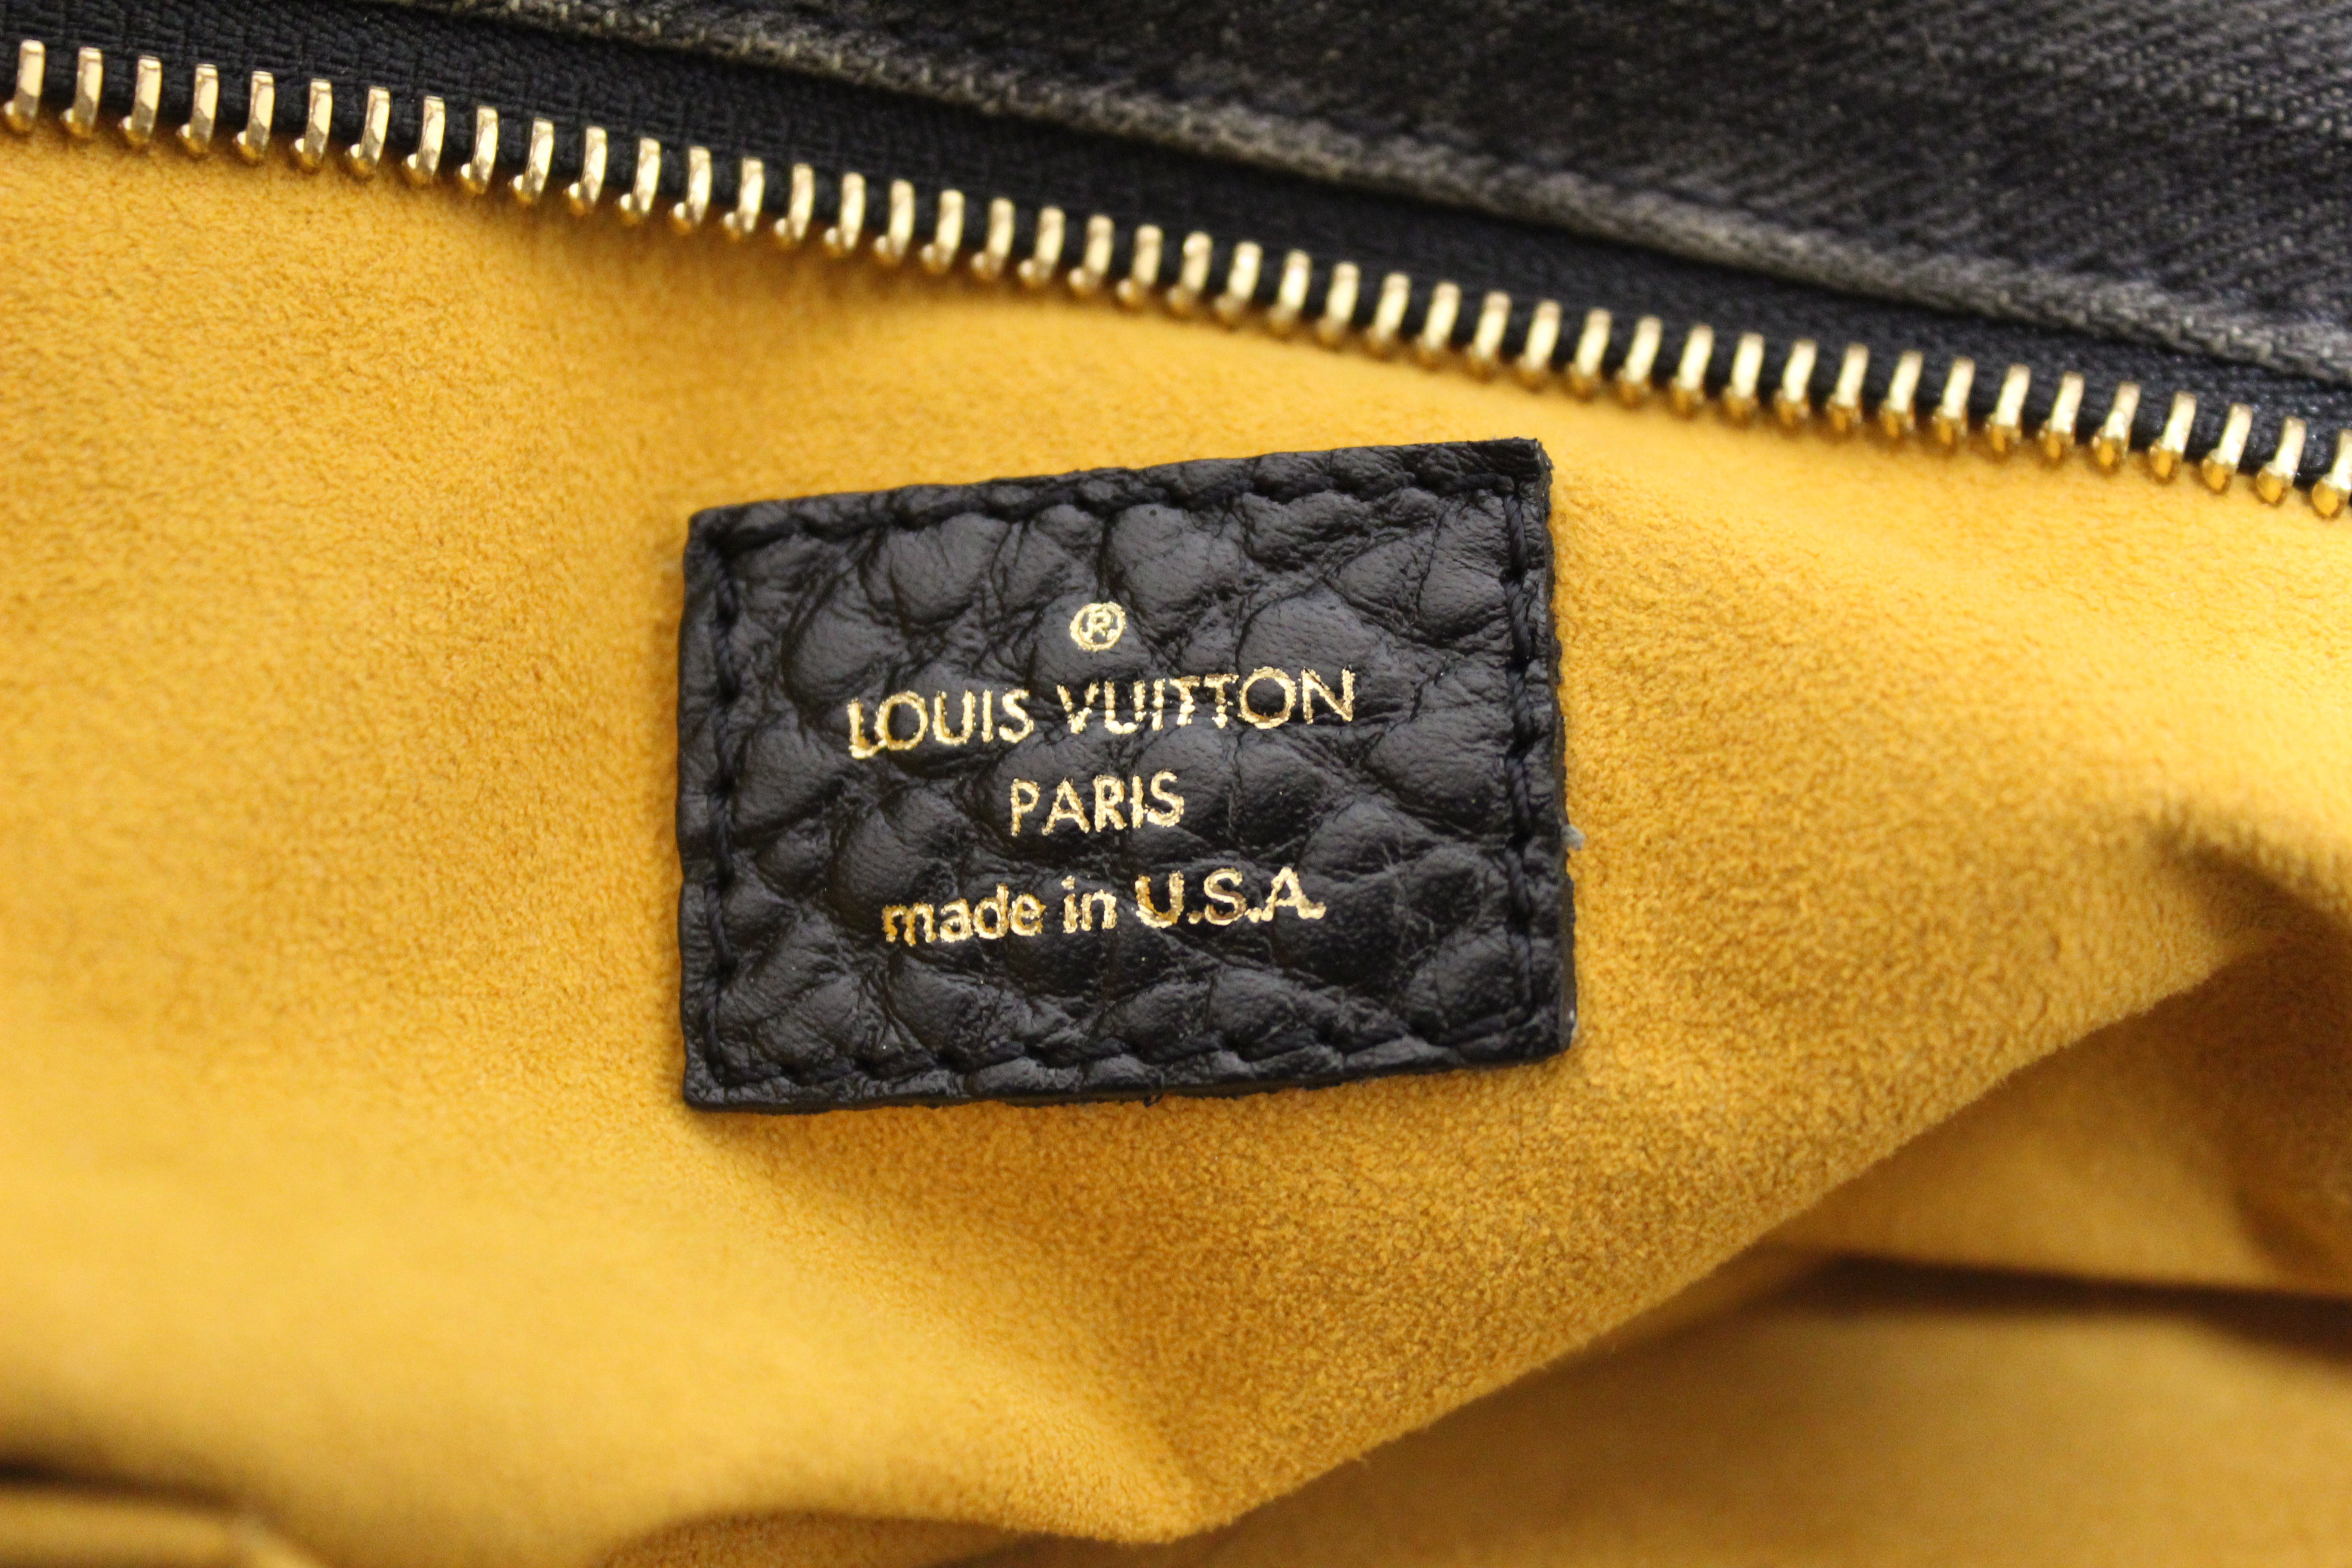 Authentic Louis Vuitton Black Denim Monogram Denim Neo Cabby PM Shoulder Bag